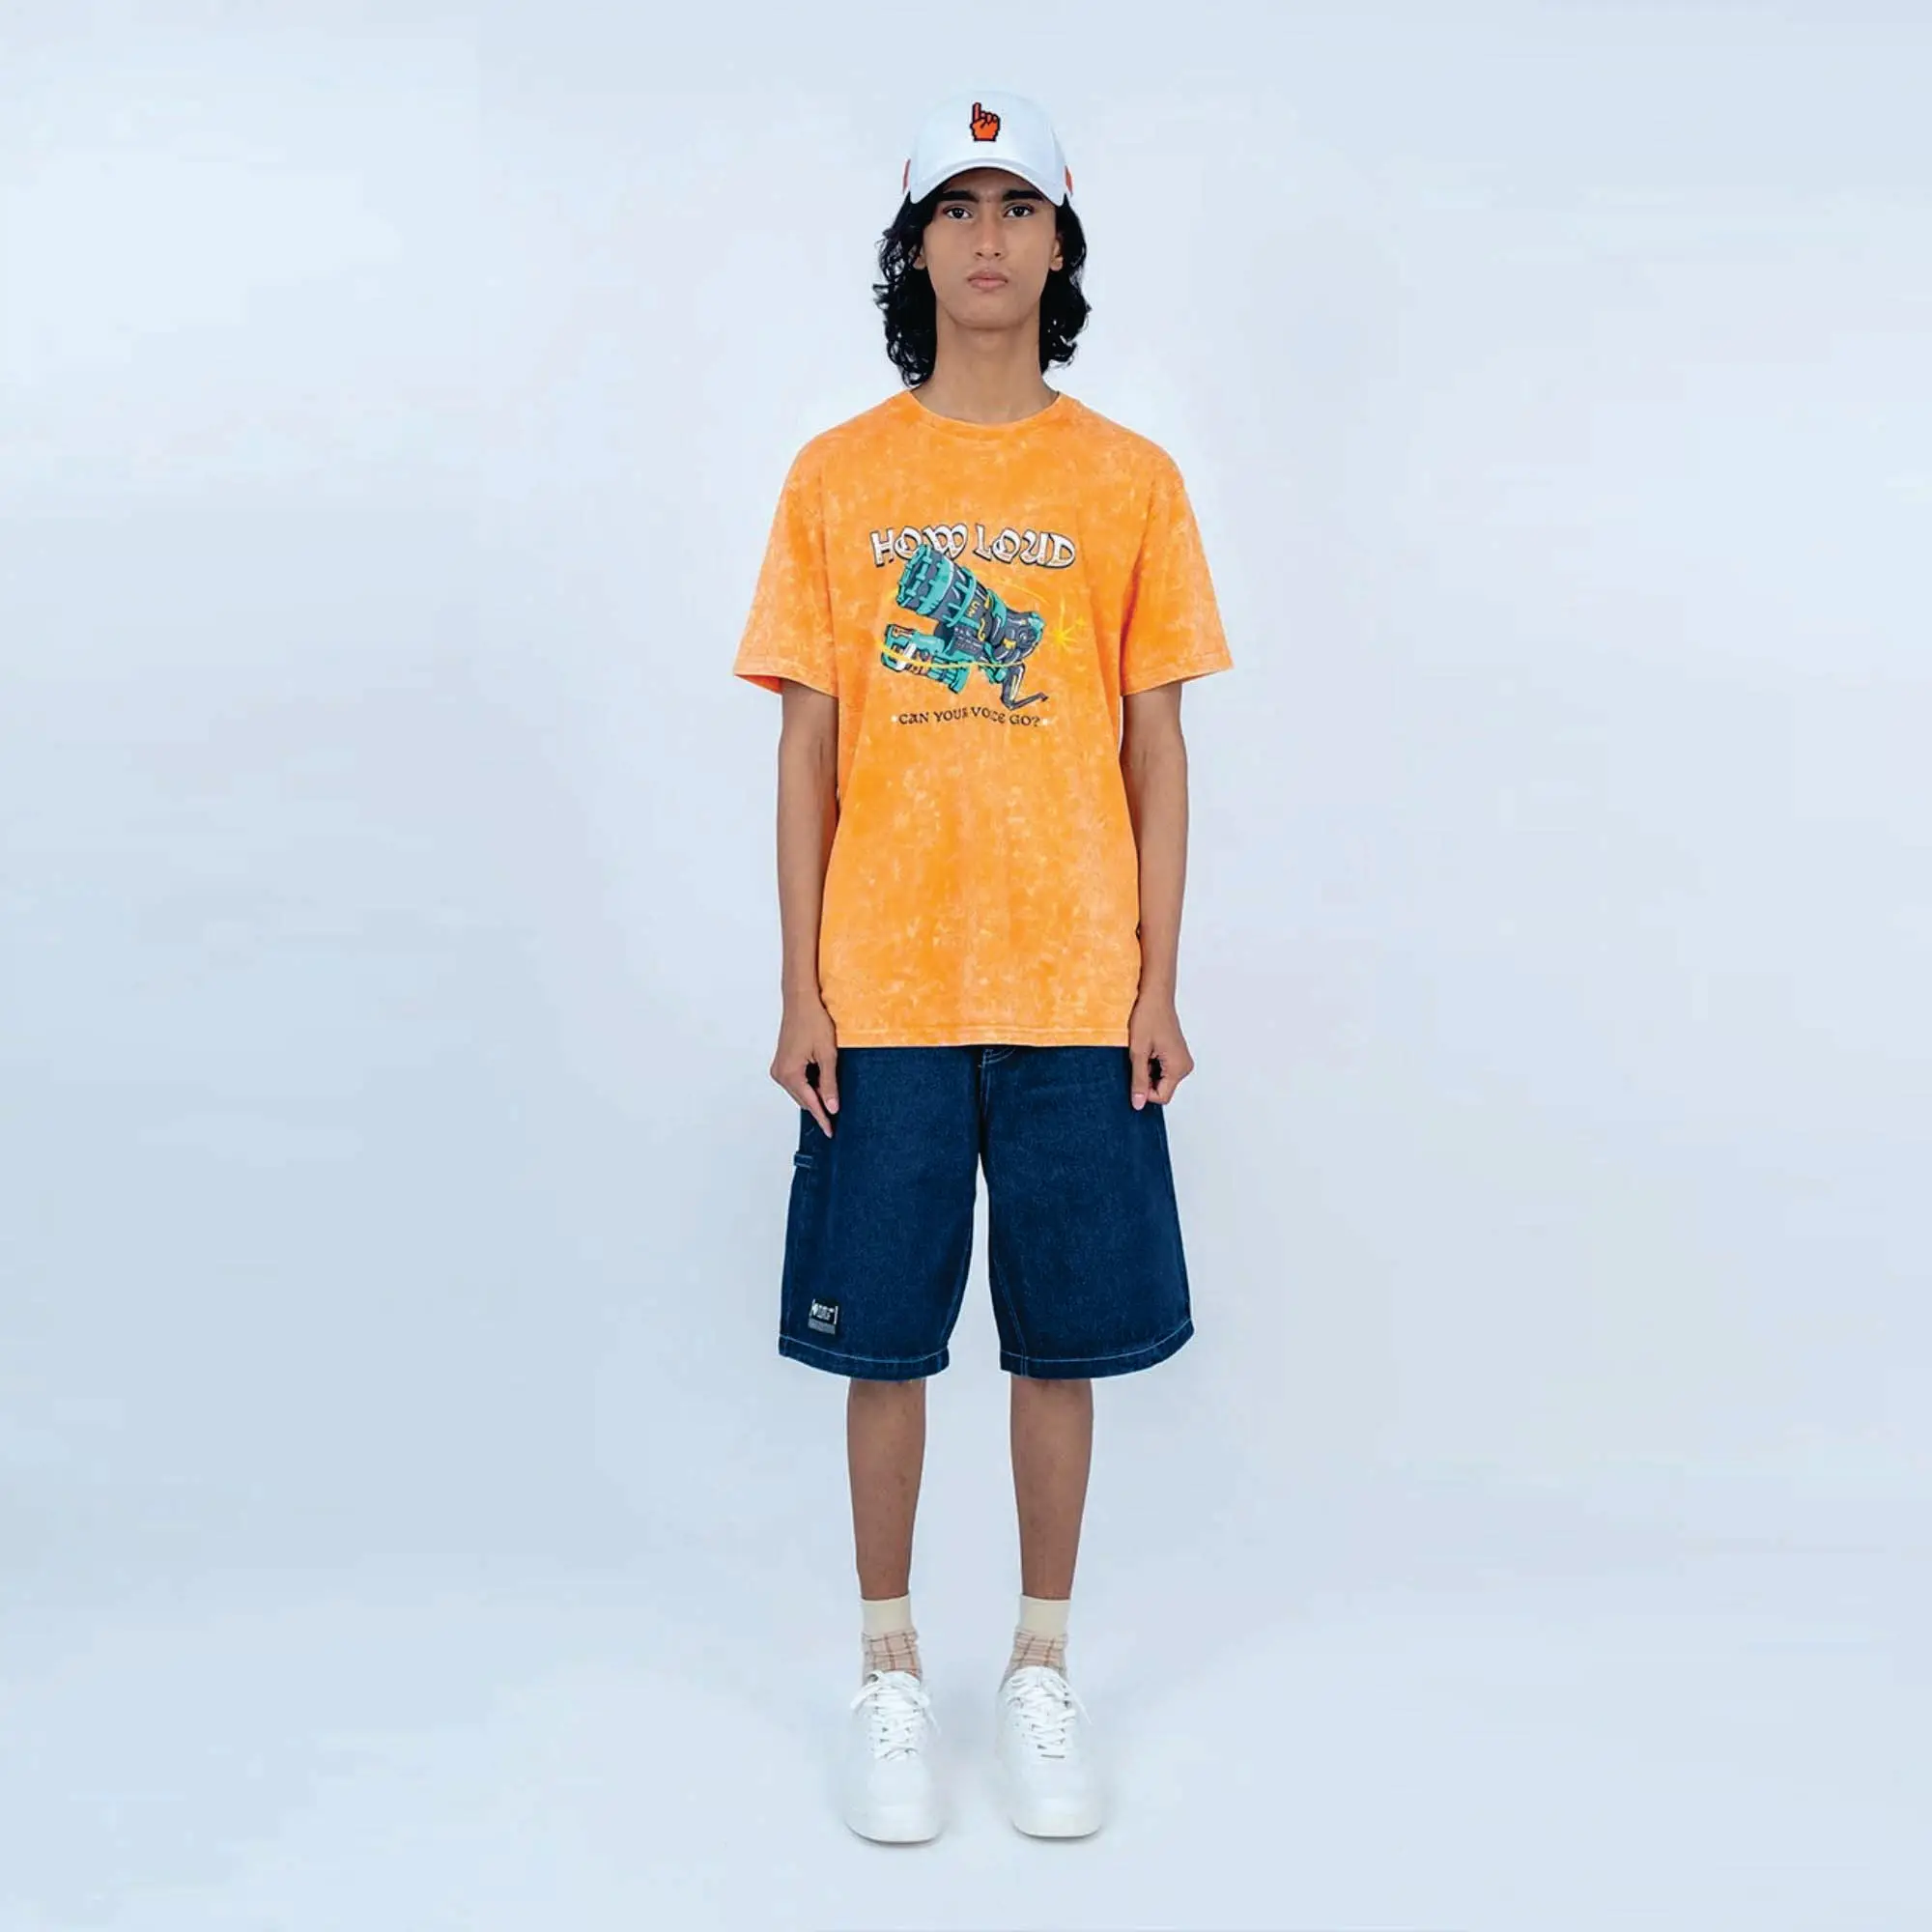 Rap Wash Old Short-Sleeved T-Shirt for Men High Street Orange T-Shirt Dark West Coast Style Hip-Hop Men's Clothing Tops Y2K Tees